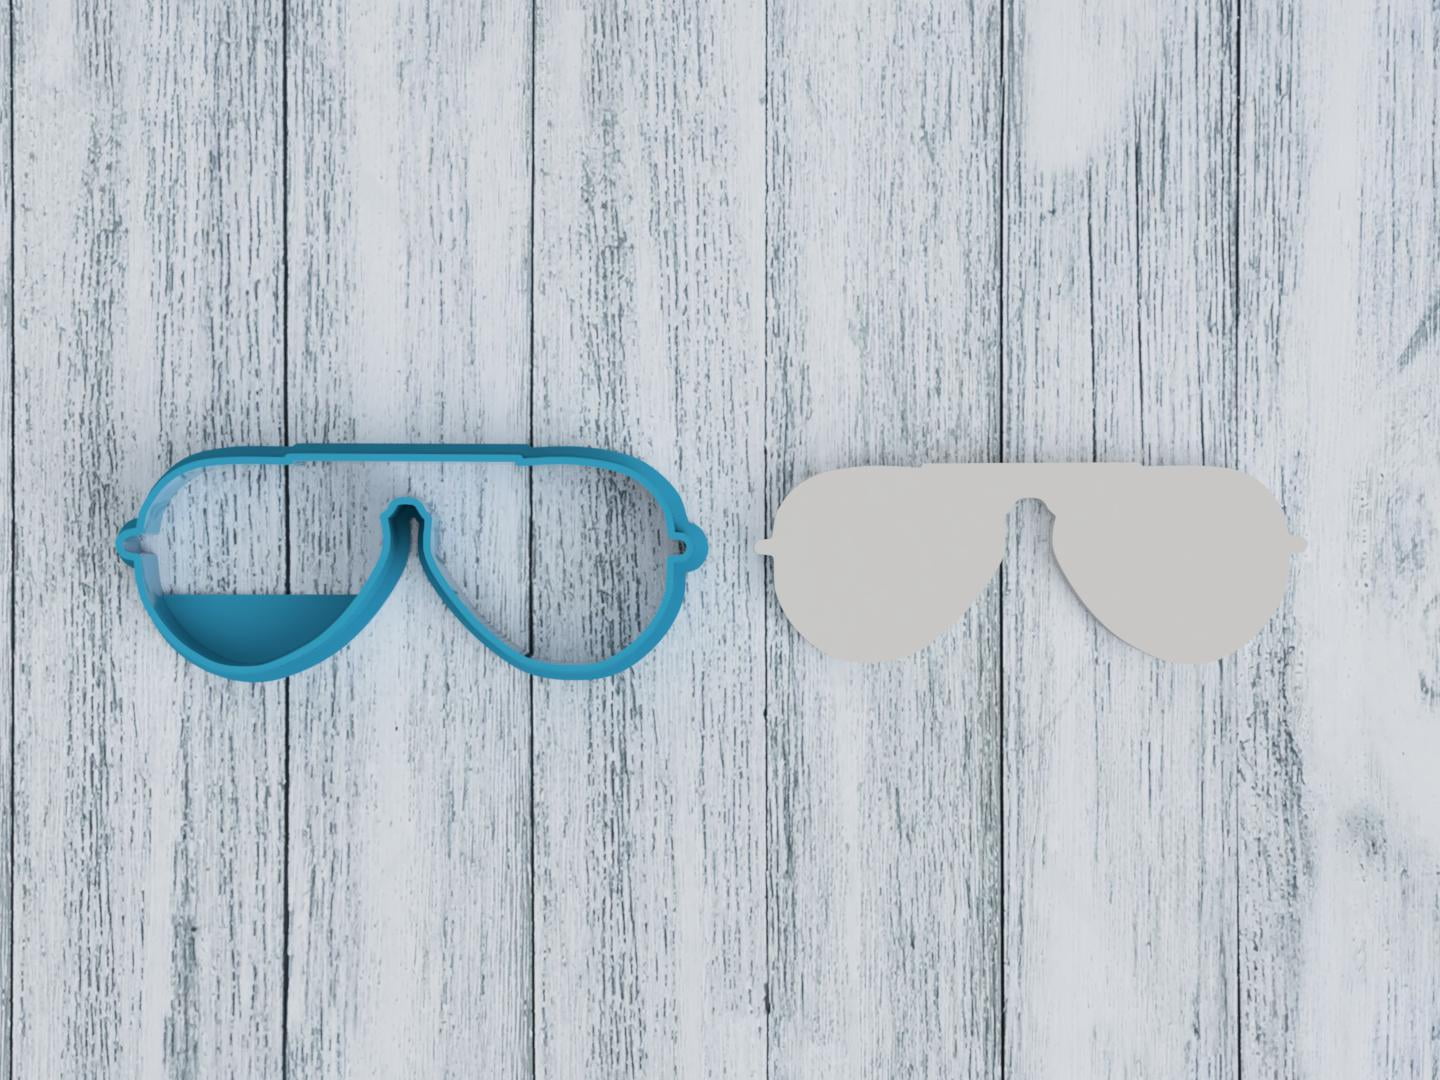 Details about   Sunglasses cut cookie biscuit glasses knife-fondant 3 sizes show original title